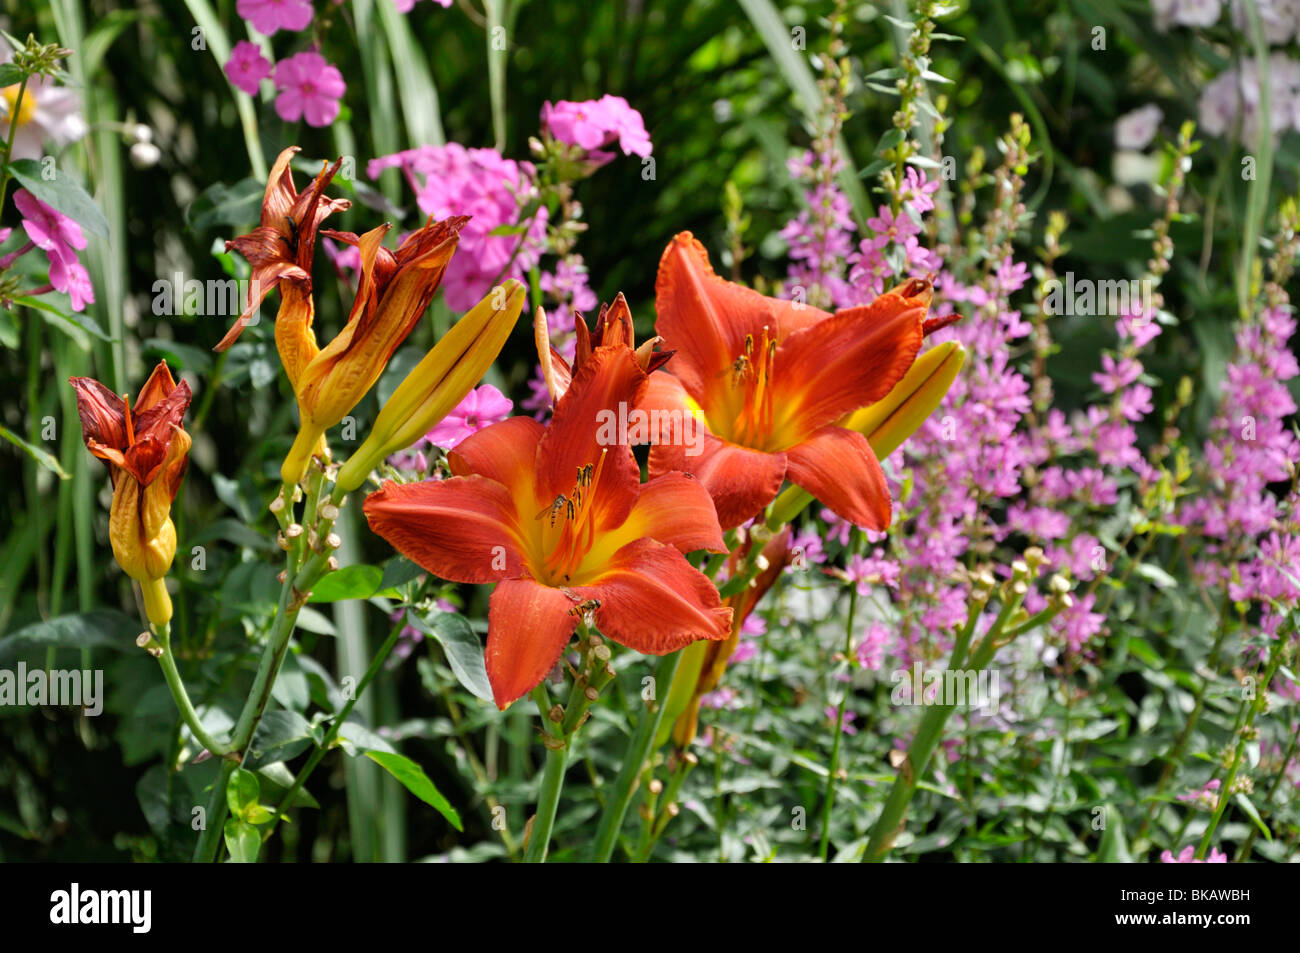 Day lilies (Hemerocallis), garden phlox (Phlox paniculata) and purple loosestrife (Lythrum salicaria) Stock Photo